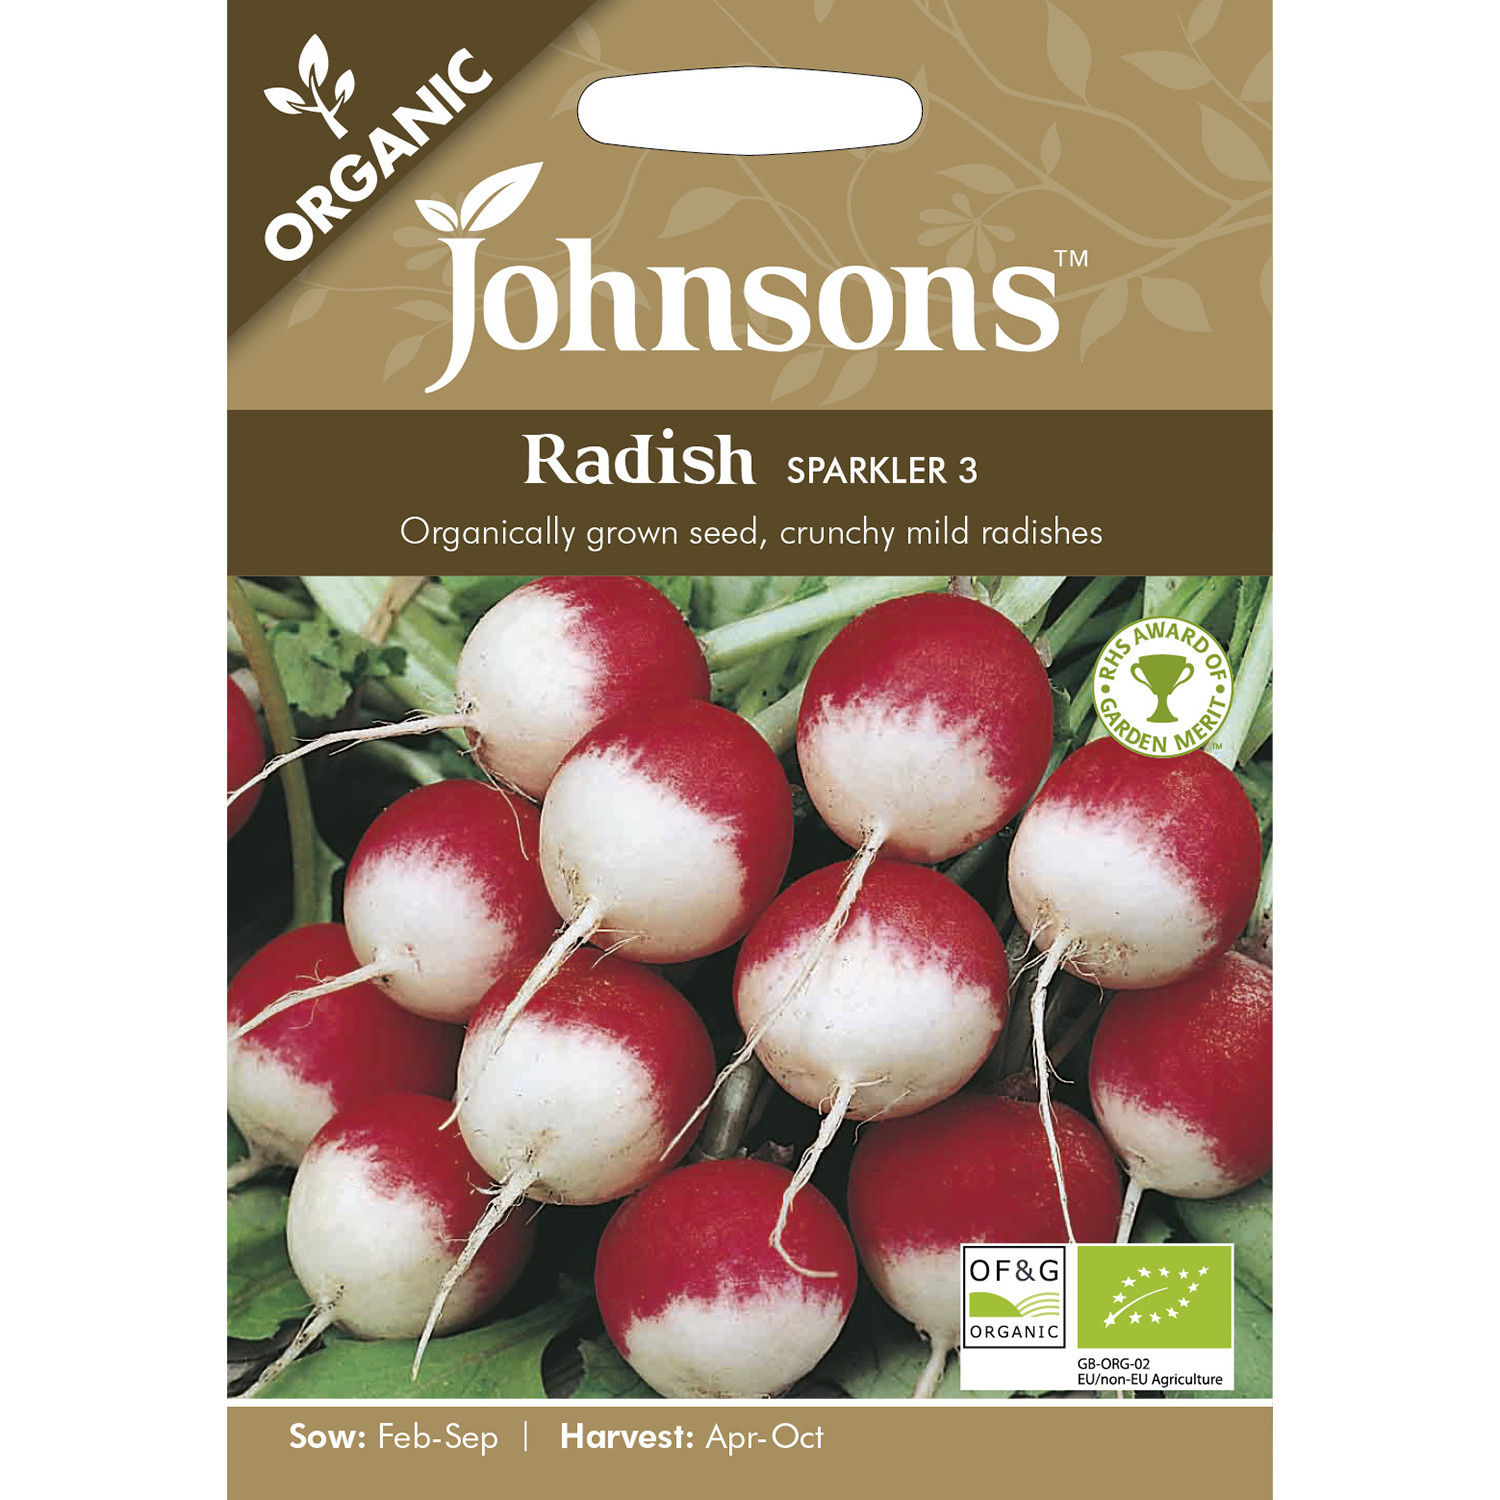 Johnsons Organic Sparkler 3 Radish Seeds Image 2